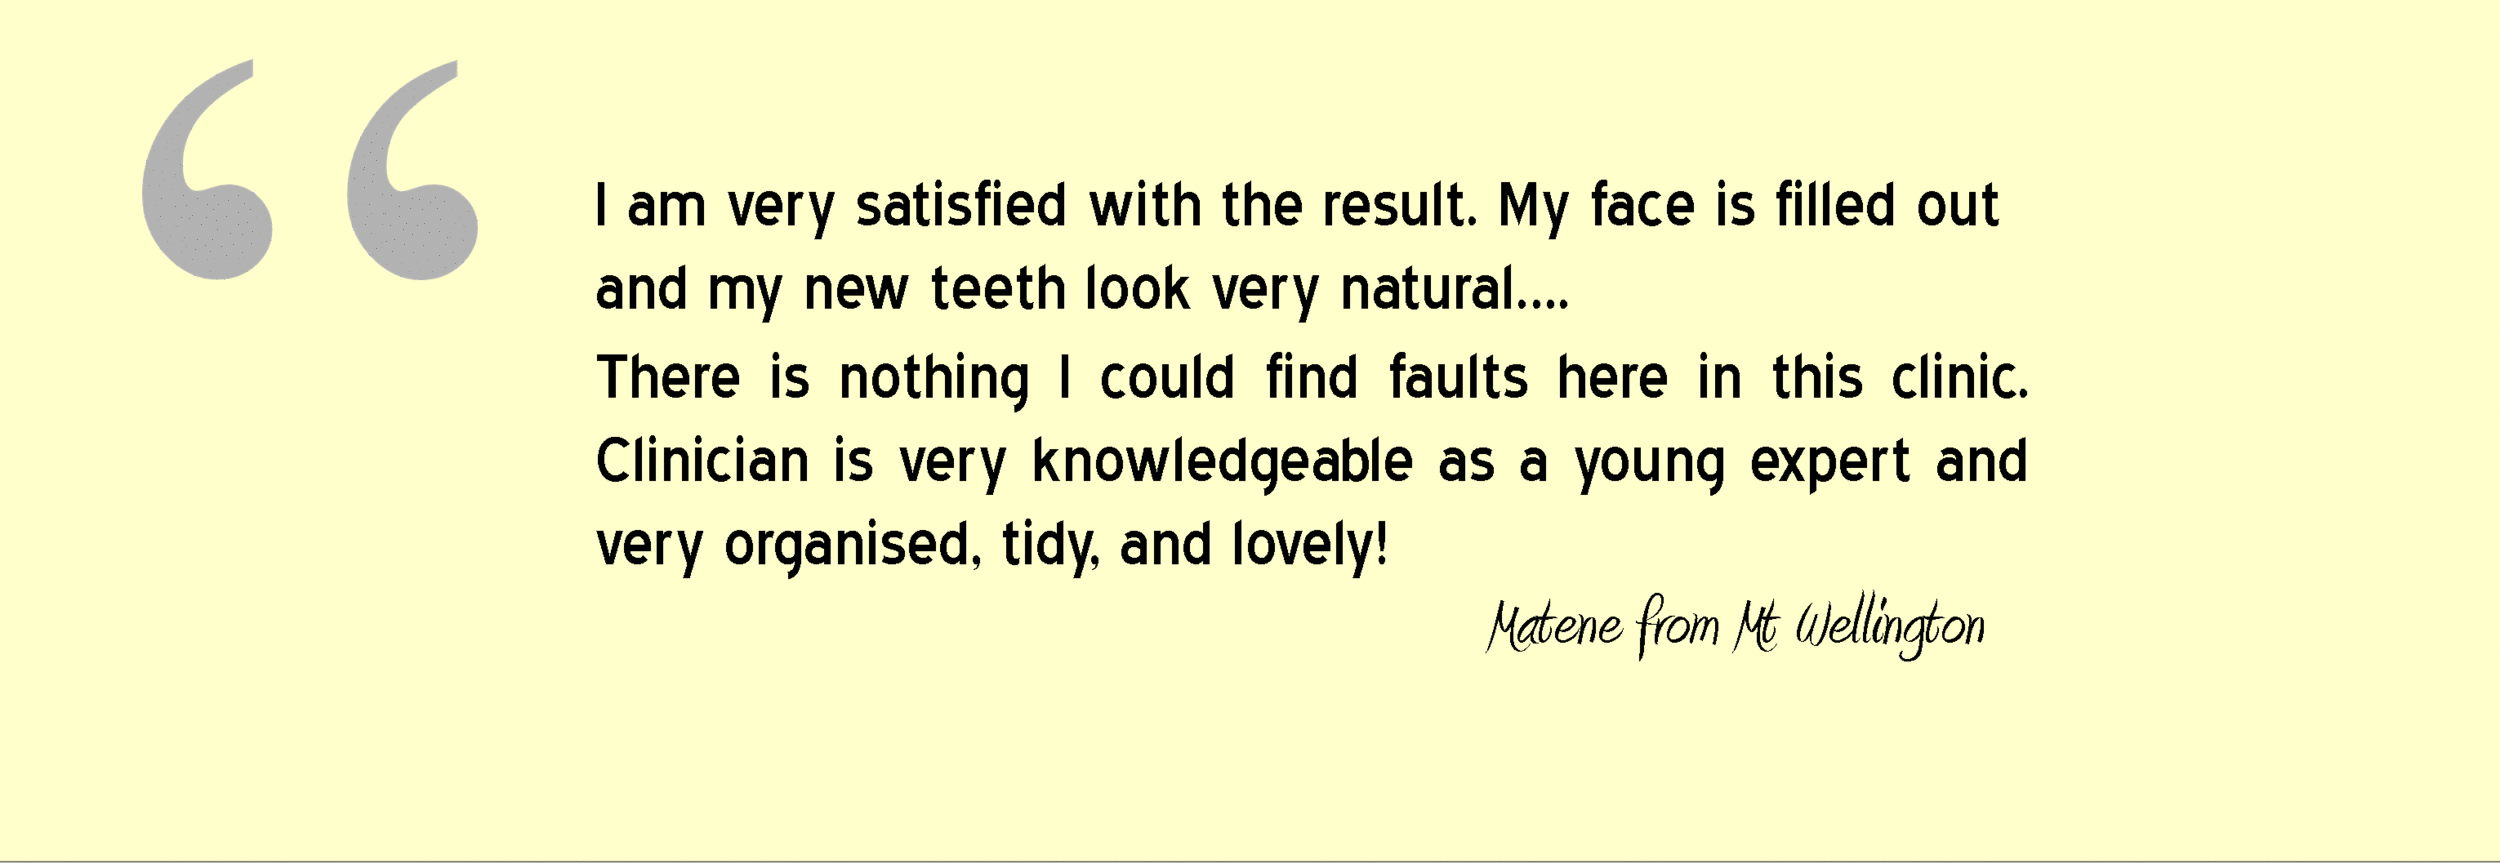 Myteeth Testimonial 3